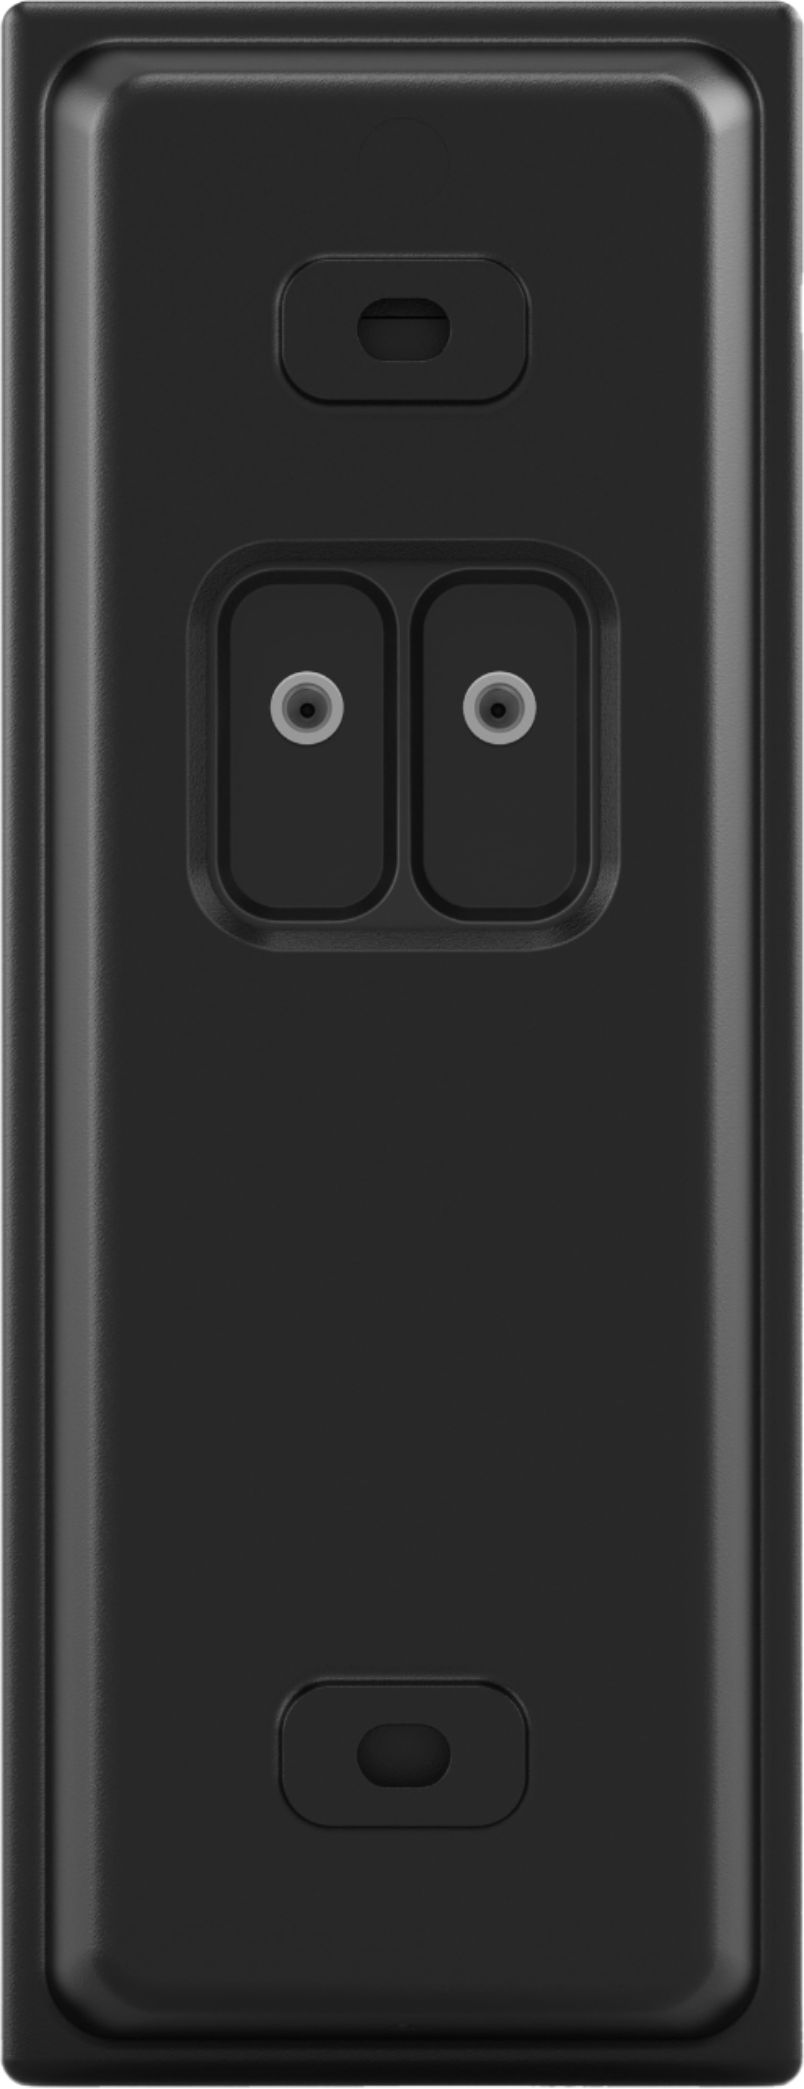 Left View: Lorex - 1080p FHD Floodlight and Video Doorbell Bundle